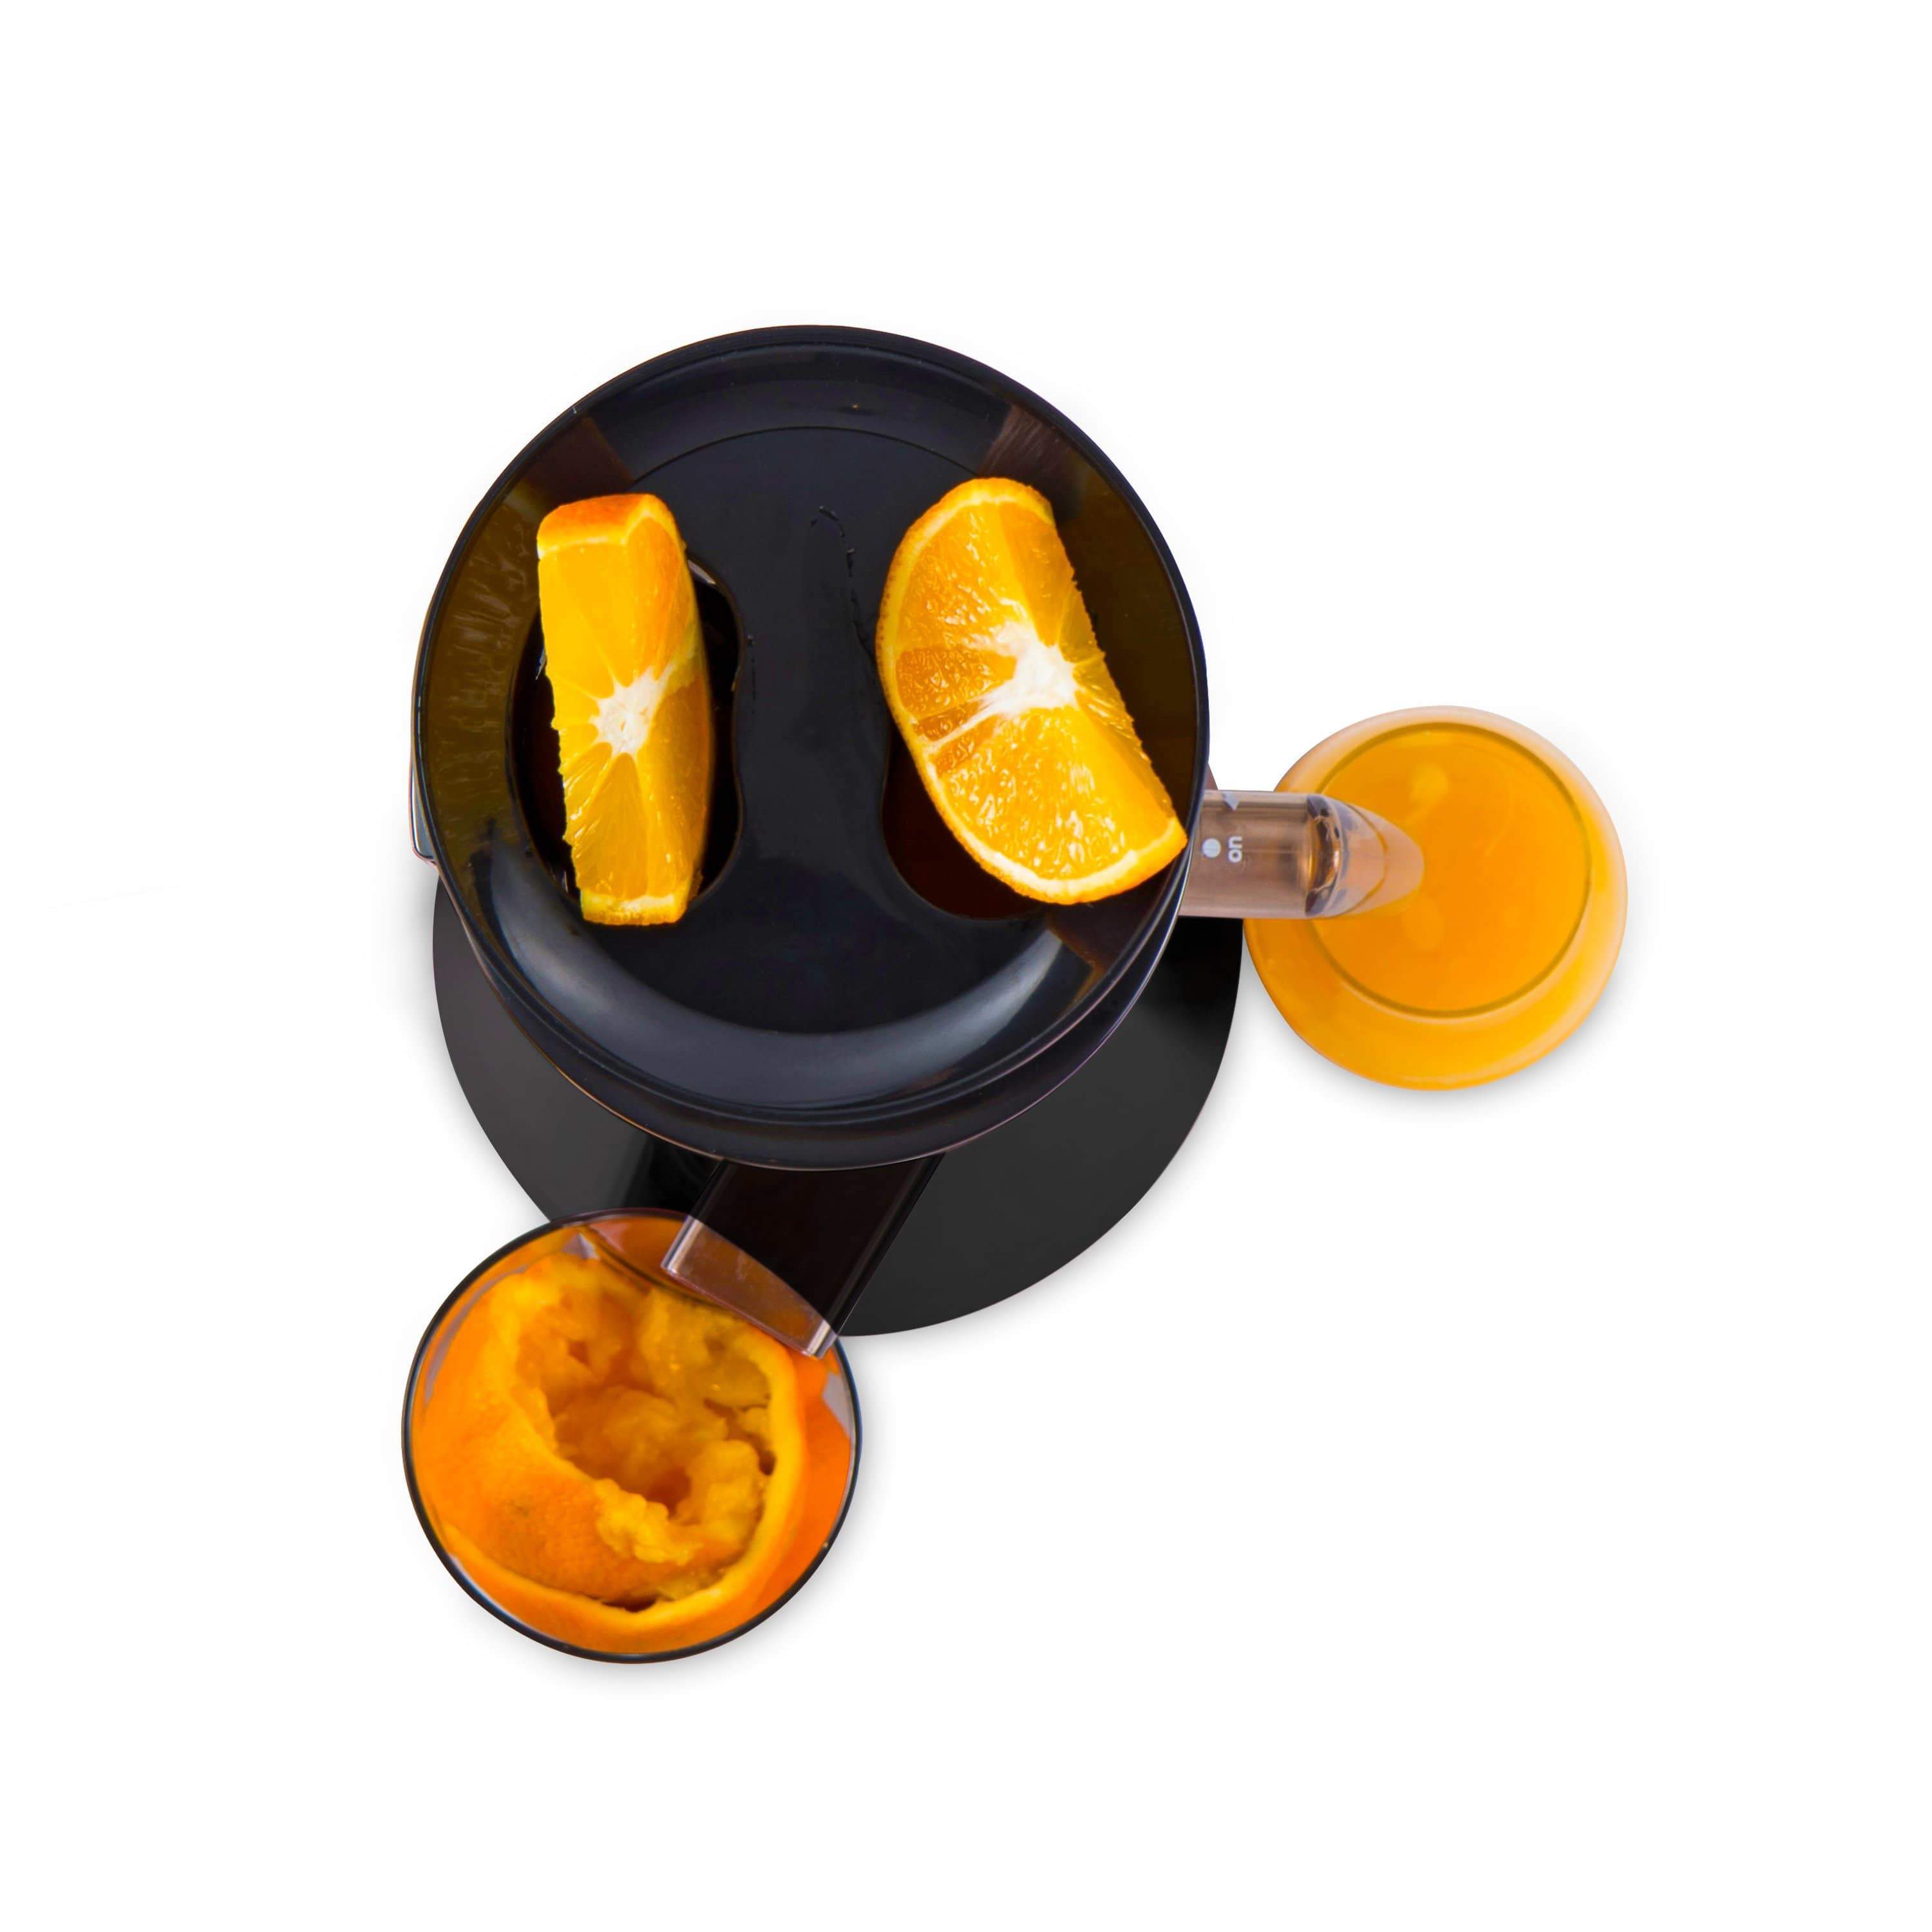 Nutrilovers Slow Juicer BLACK PEPPER NUTRI-PRESS Slow Juicer für Einsteiger | BPA-Frei (Black Pepper) (FBA) kuechengeraete haushaltsgeraete WissenWasDrinIst